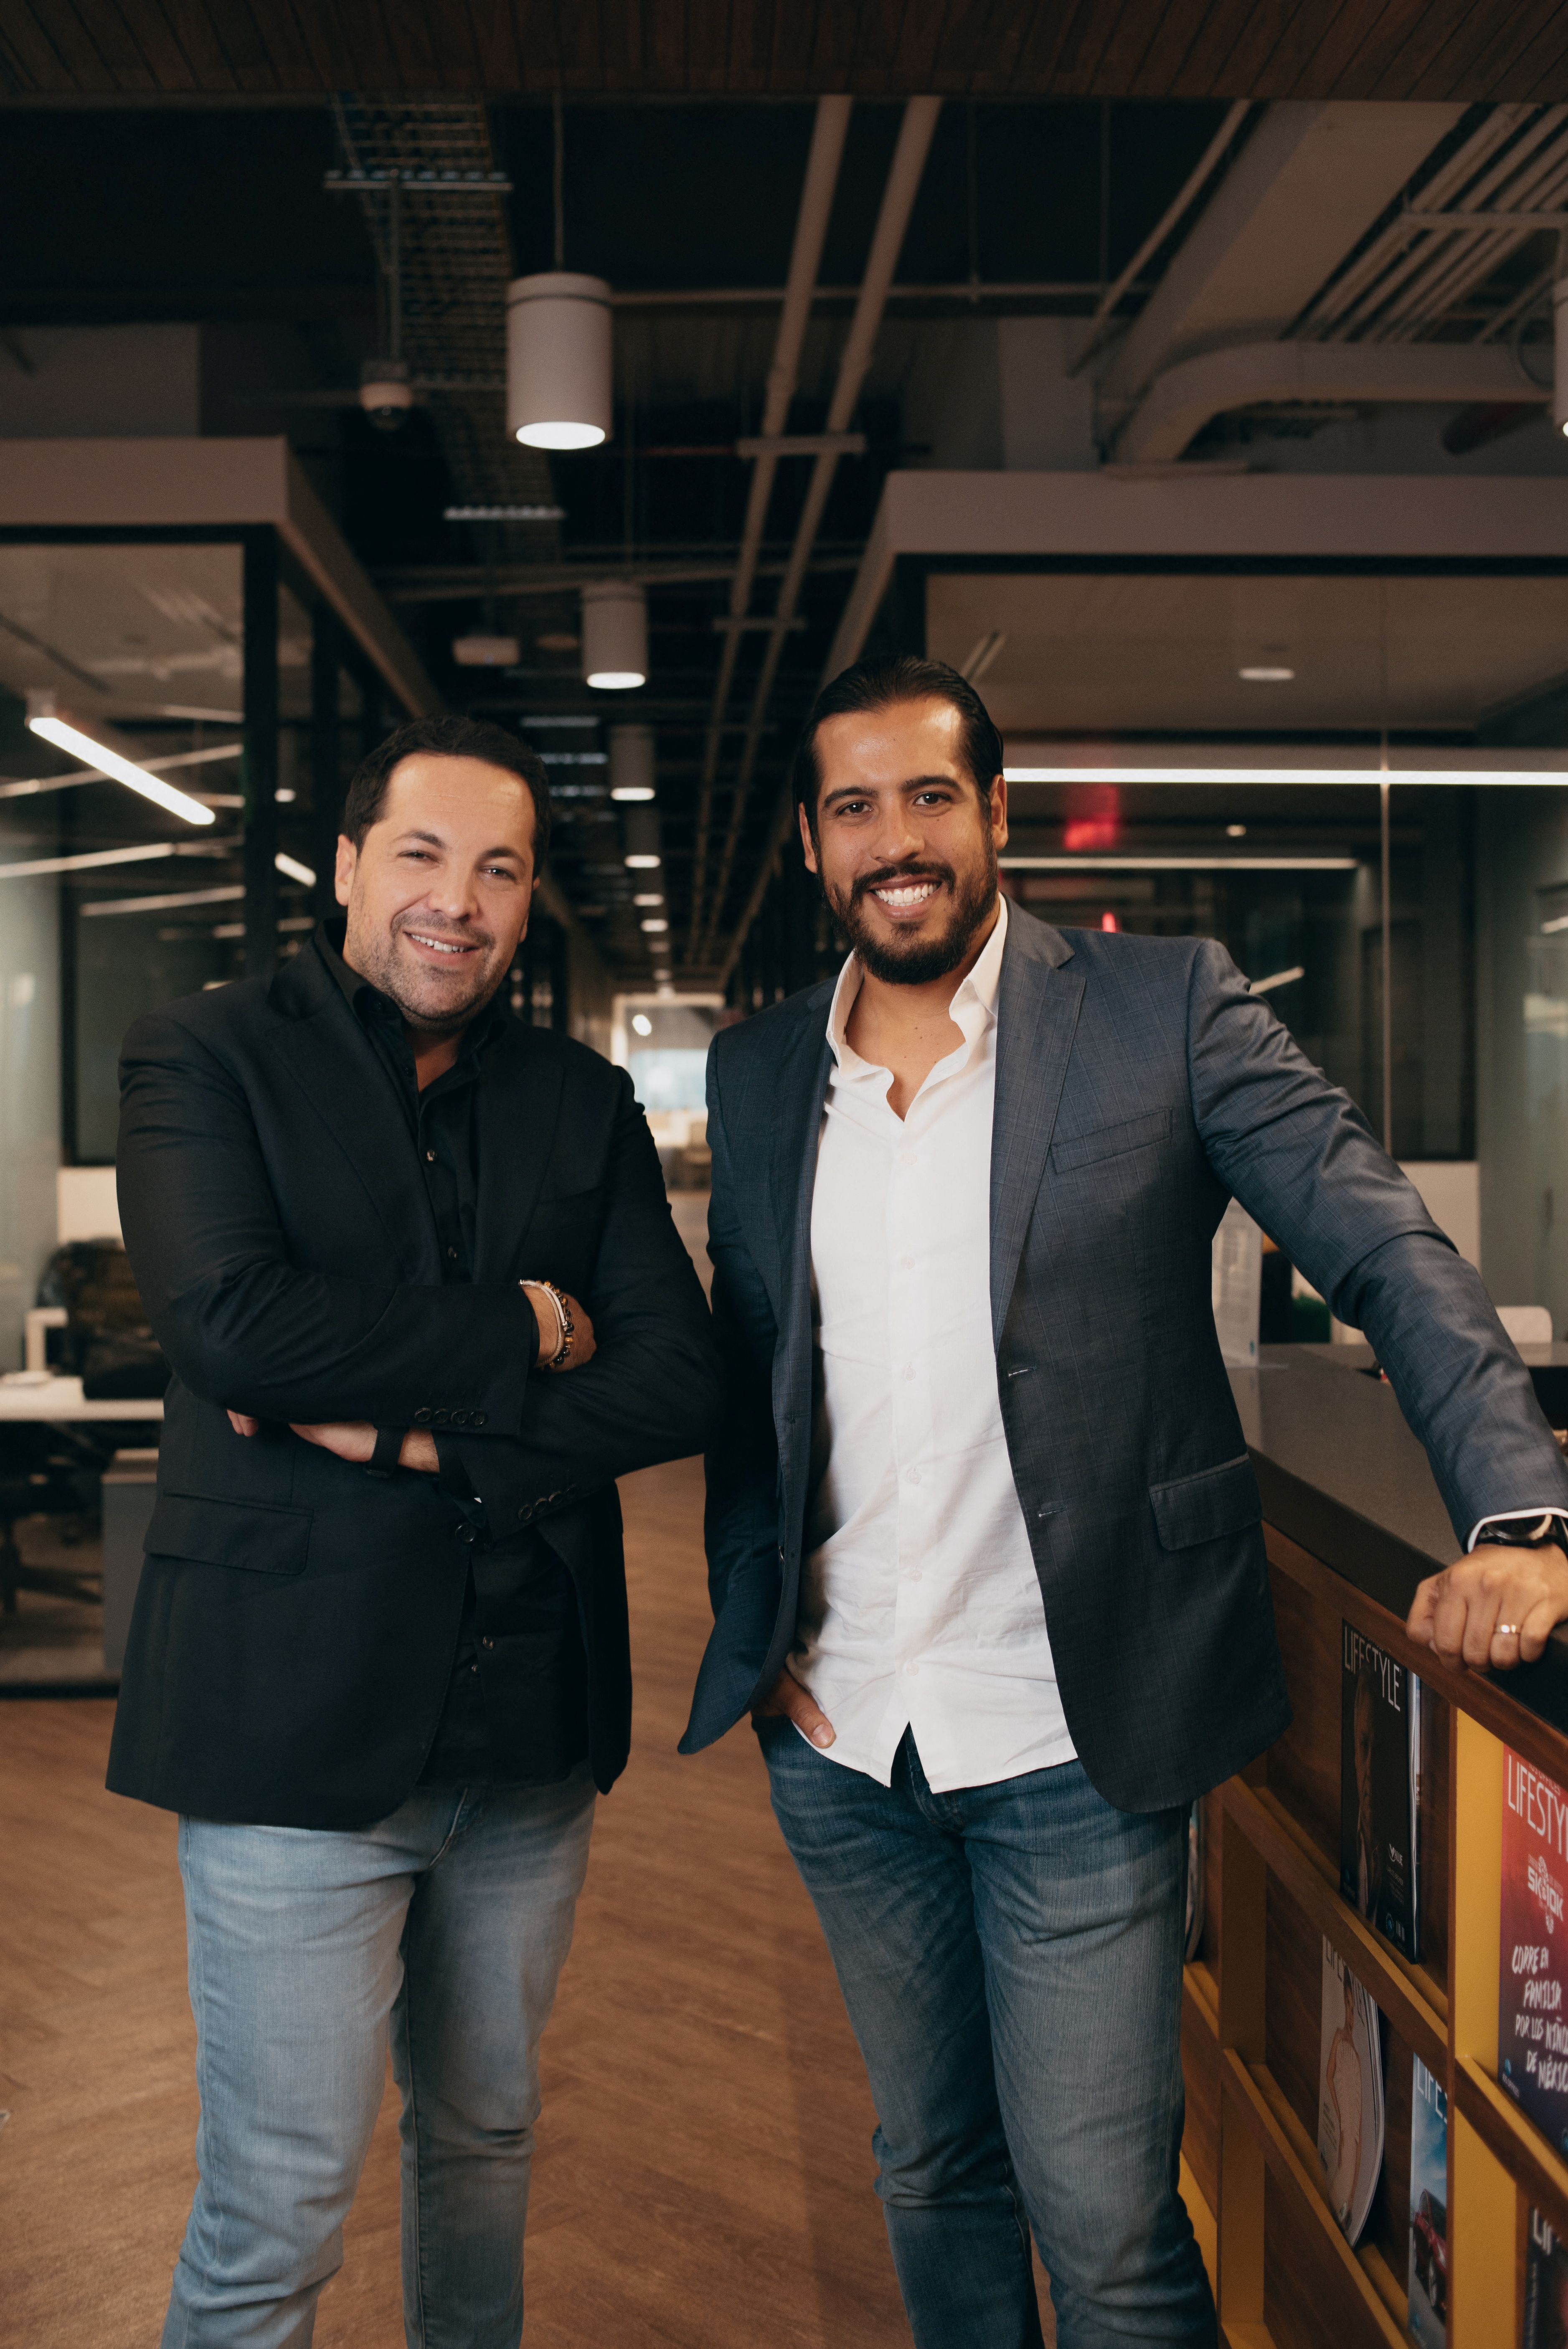 Ecuadorian 'unicorn' Kushki buys finance service startup in Mexican expansion